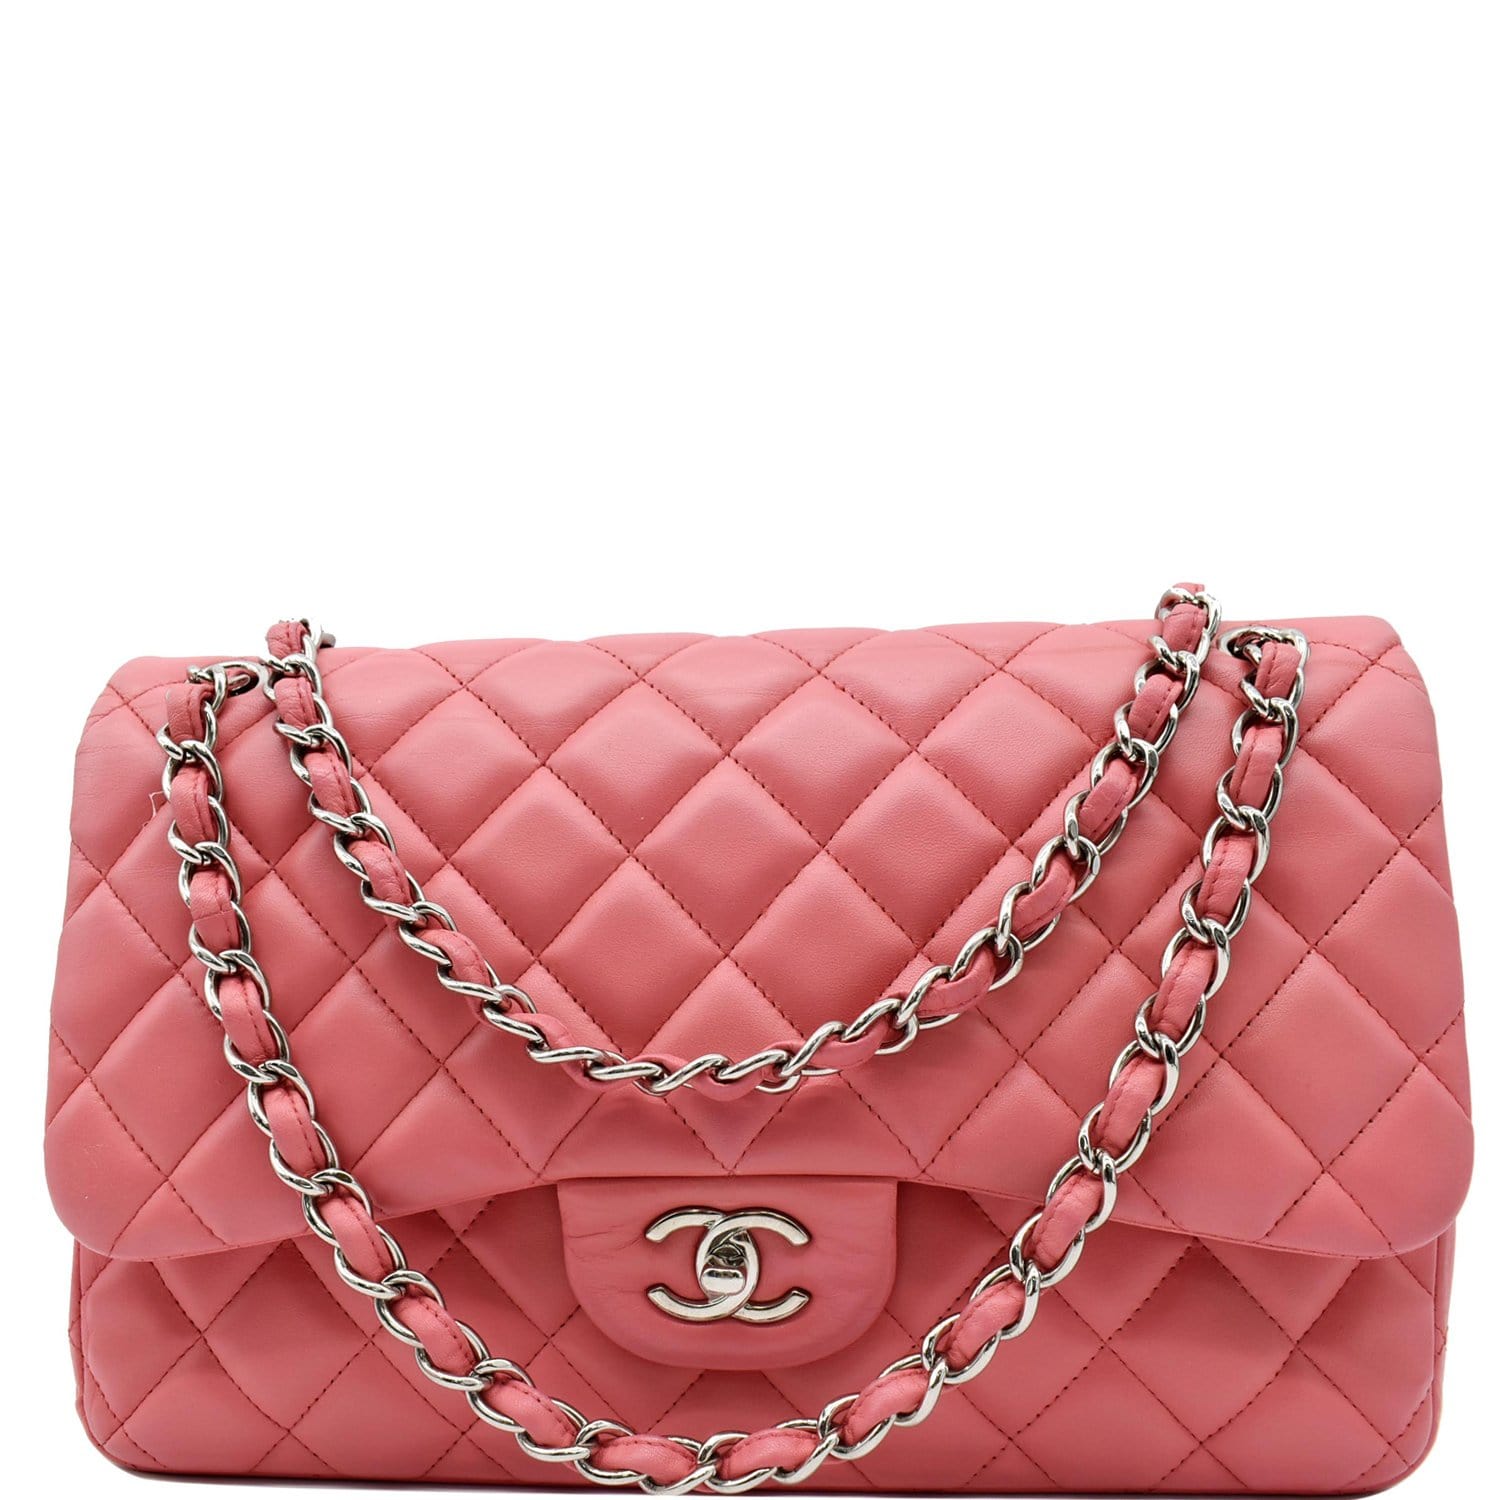 Chanel Pre Owned jumbo Double Flap shoulder bag - ShopStyle